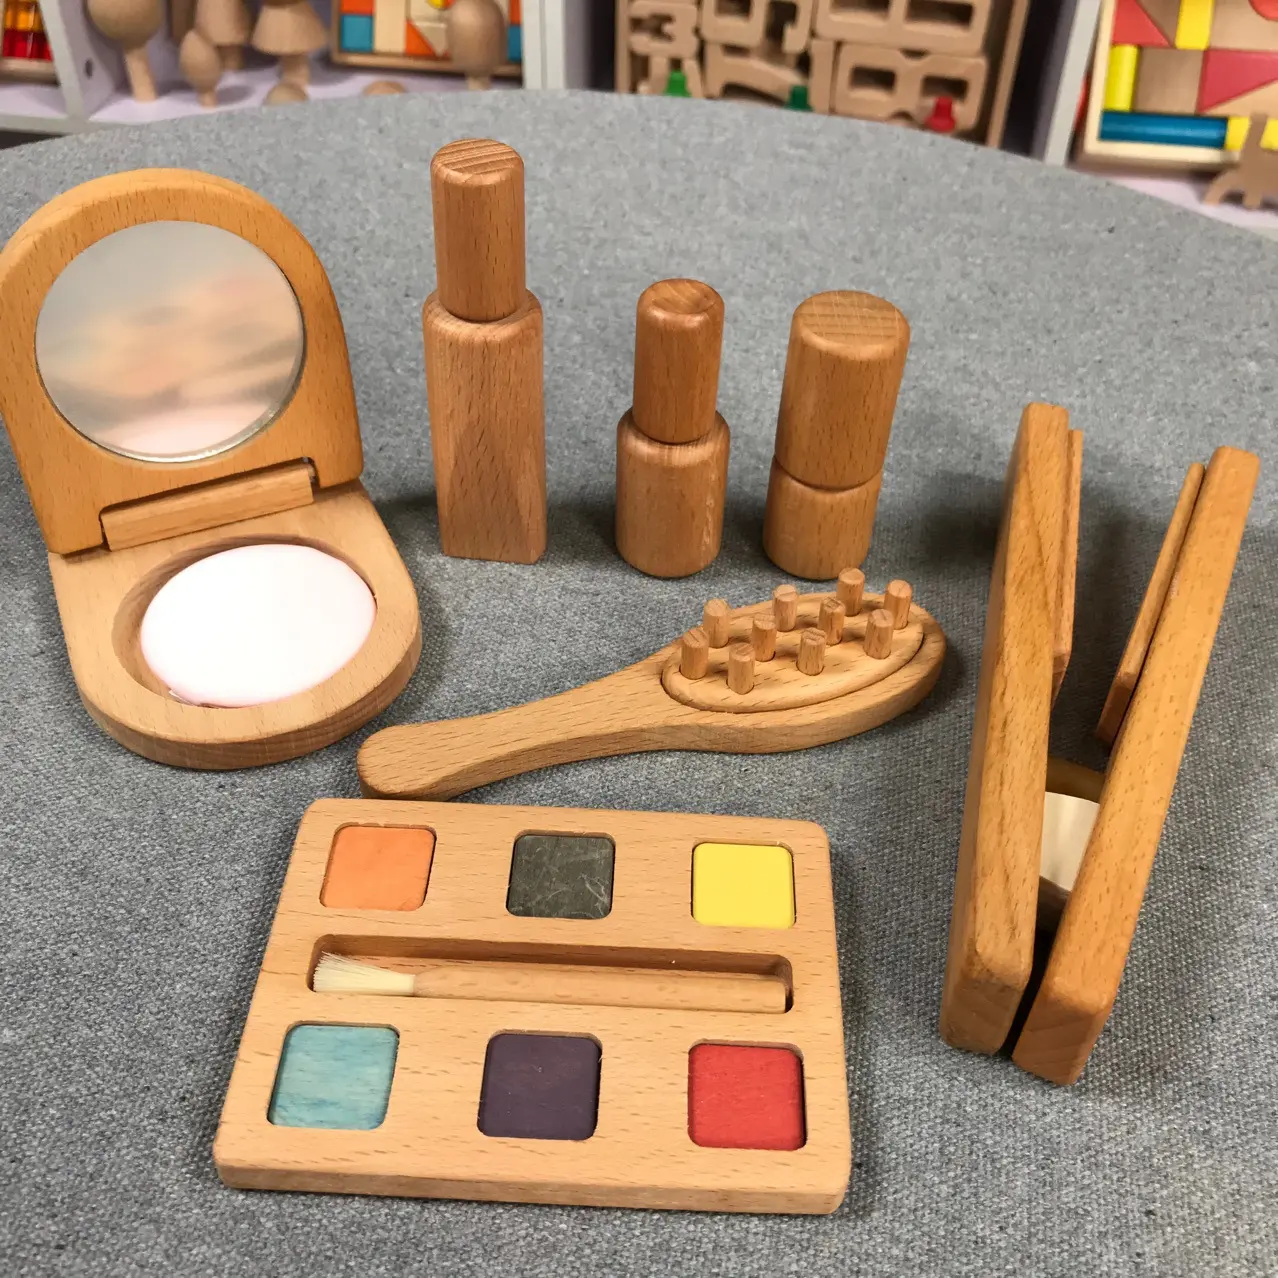 Sensory Montessori Development Motor Skills Pretend Wooden Makeup Set Play Makeup Toy Kit Set For 3+ Years Toddlers Children